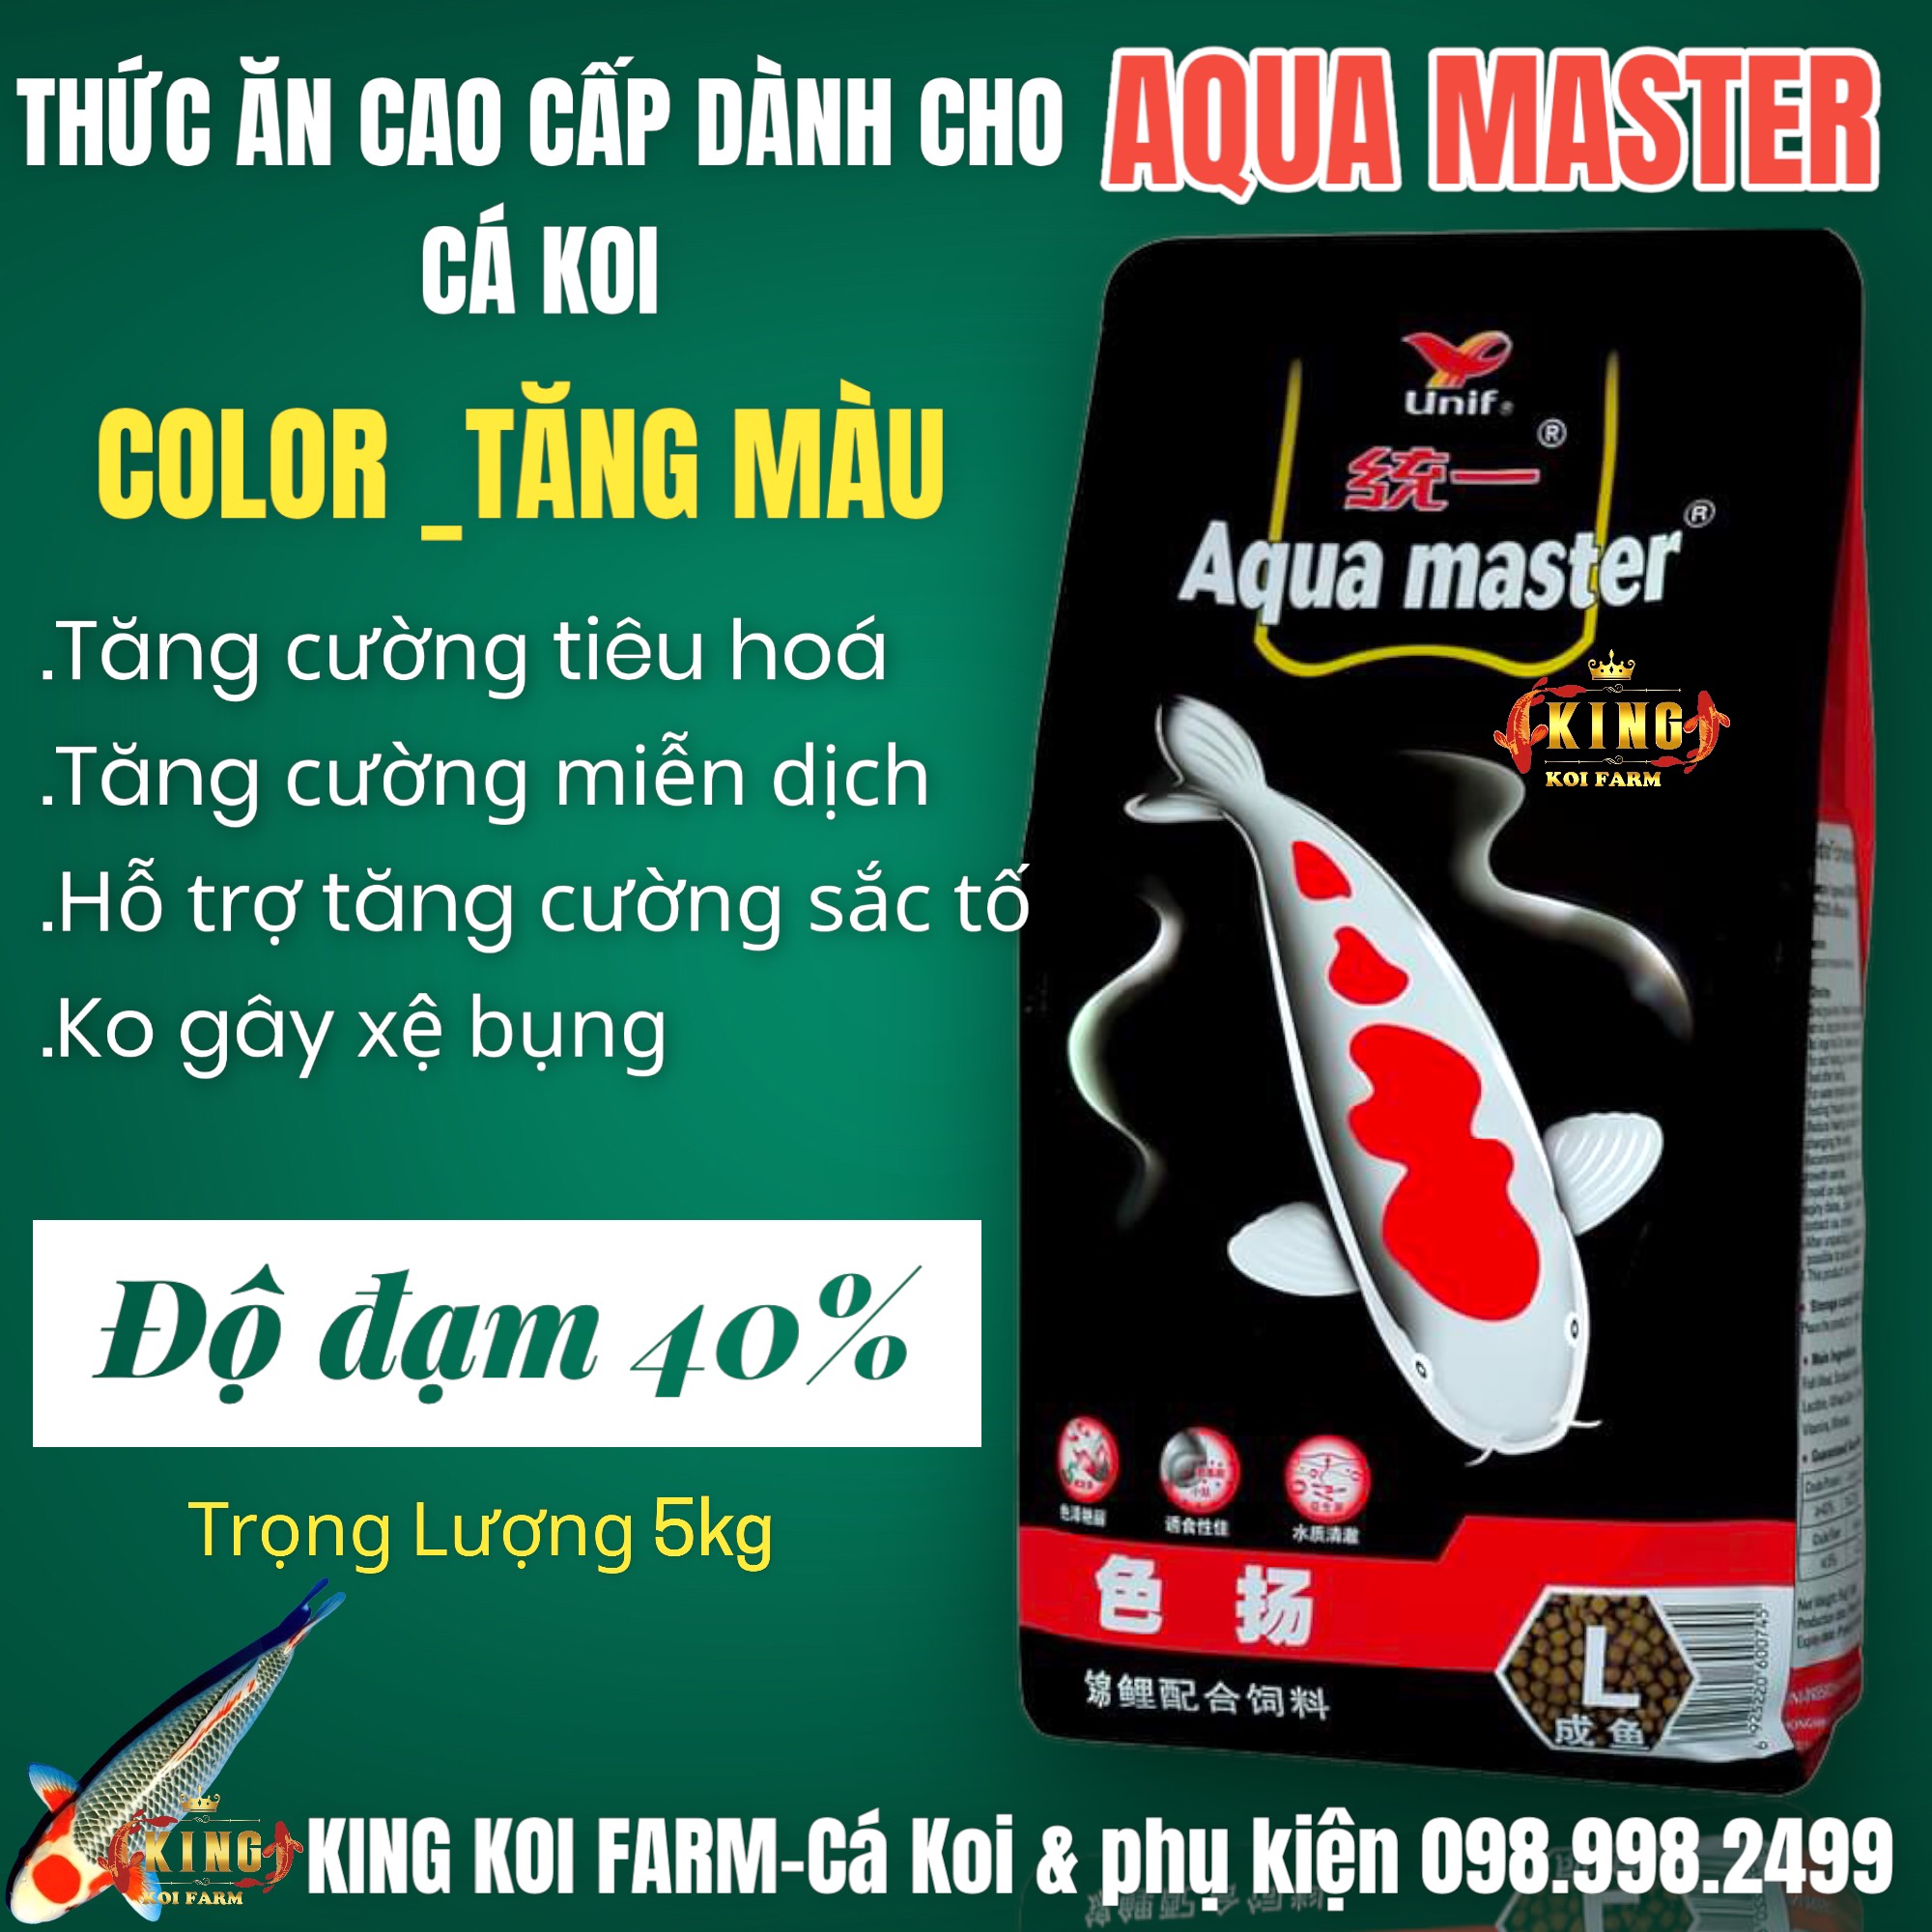 Feed koi fish Aqua master Hi growth